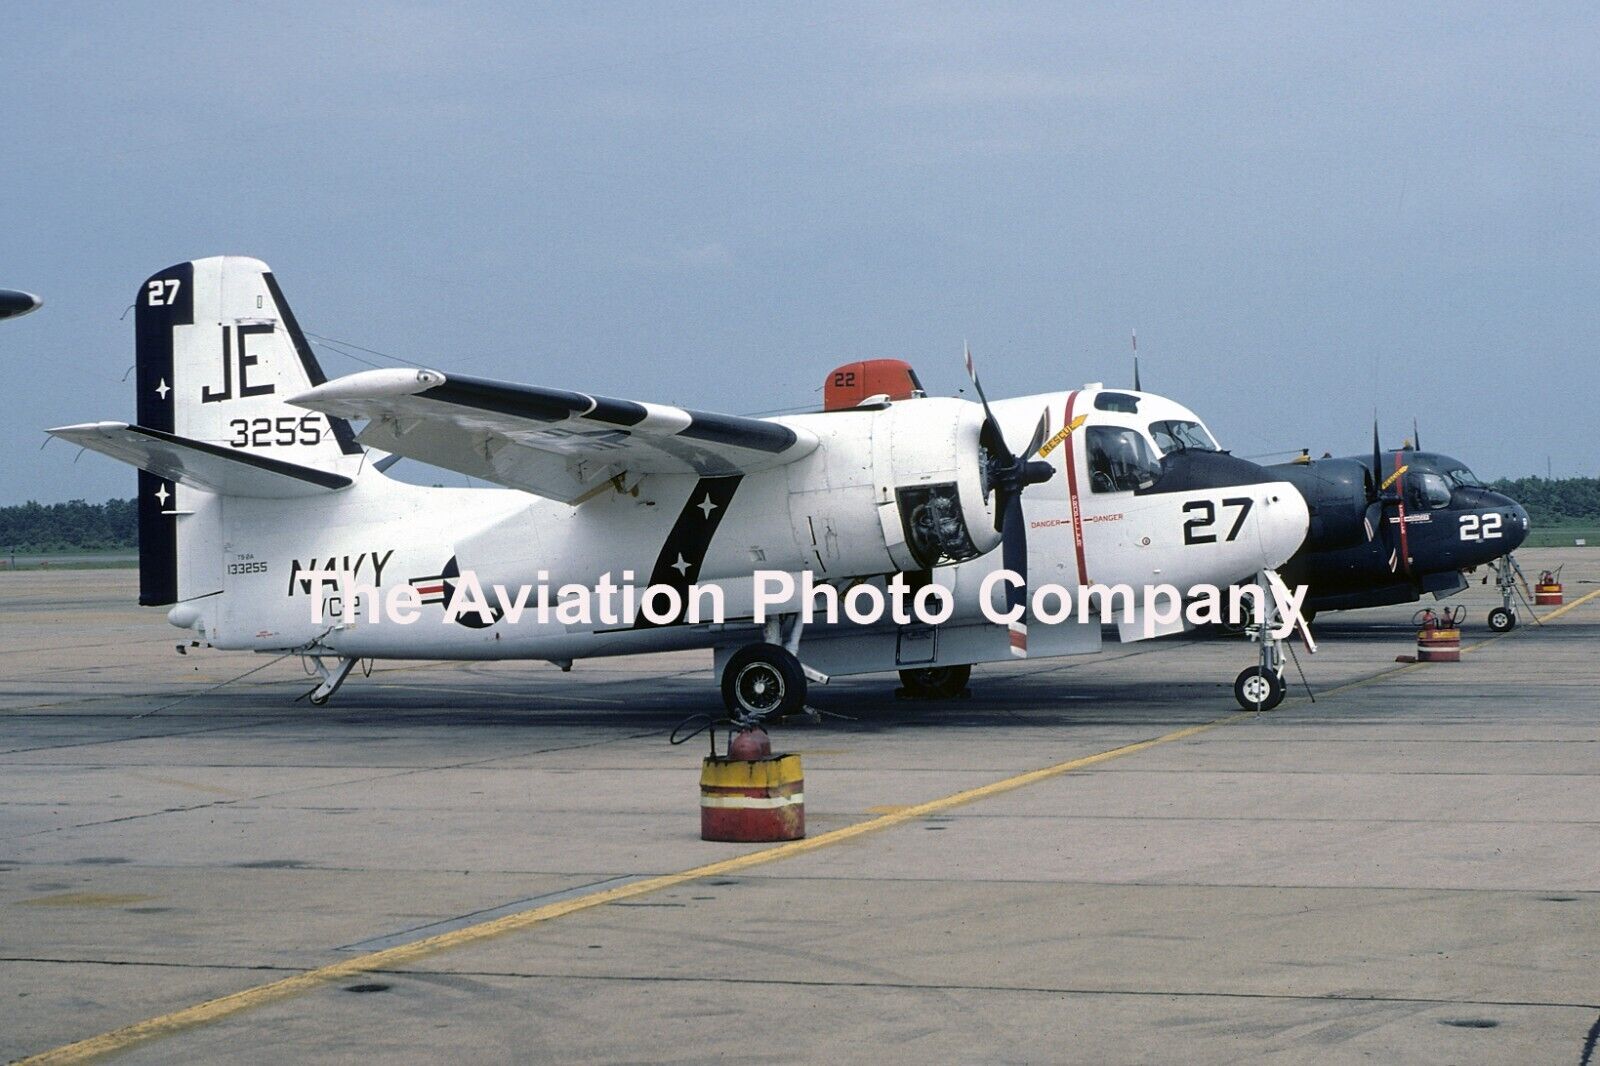 US Navy VC-2 Grumman TS-2A Tracker 133255/JE-27 (1974) Photograph